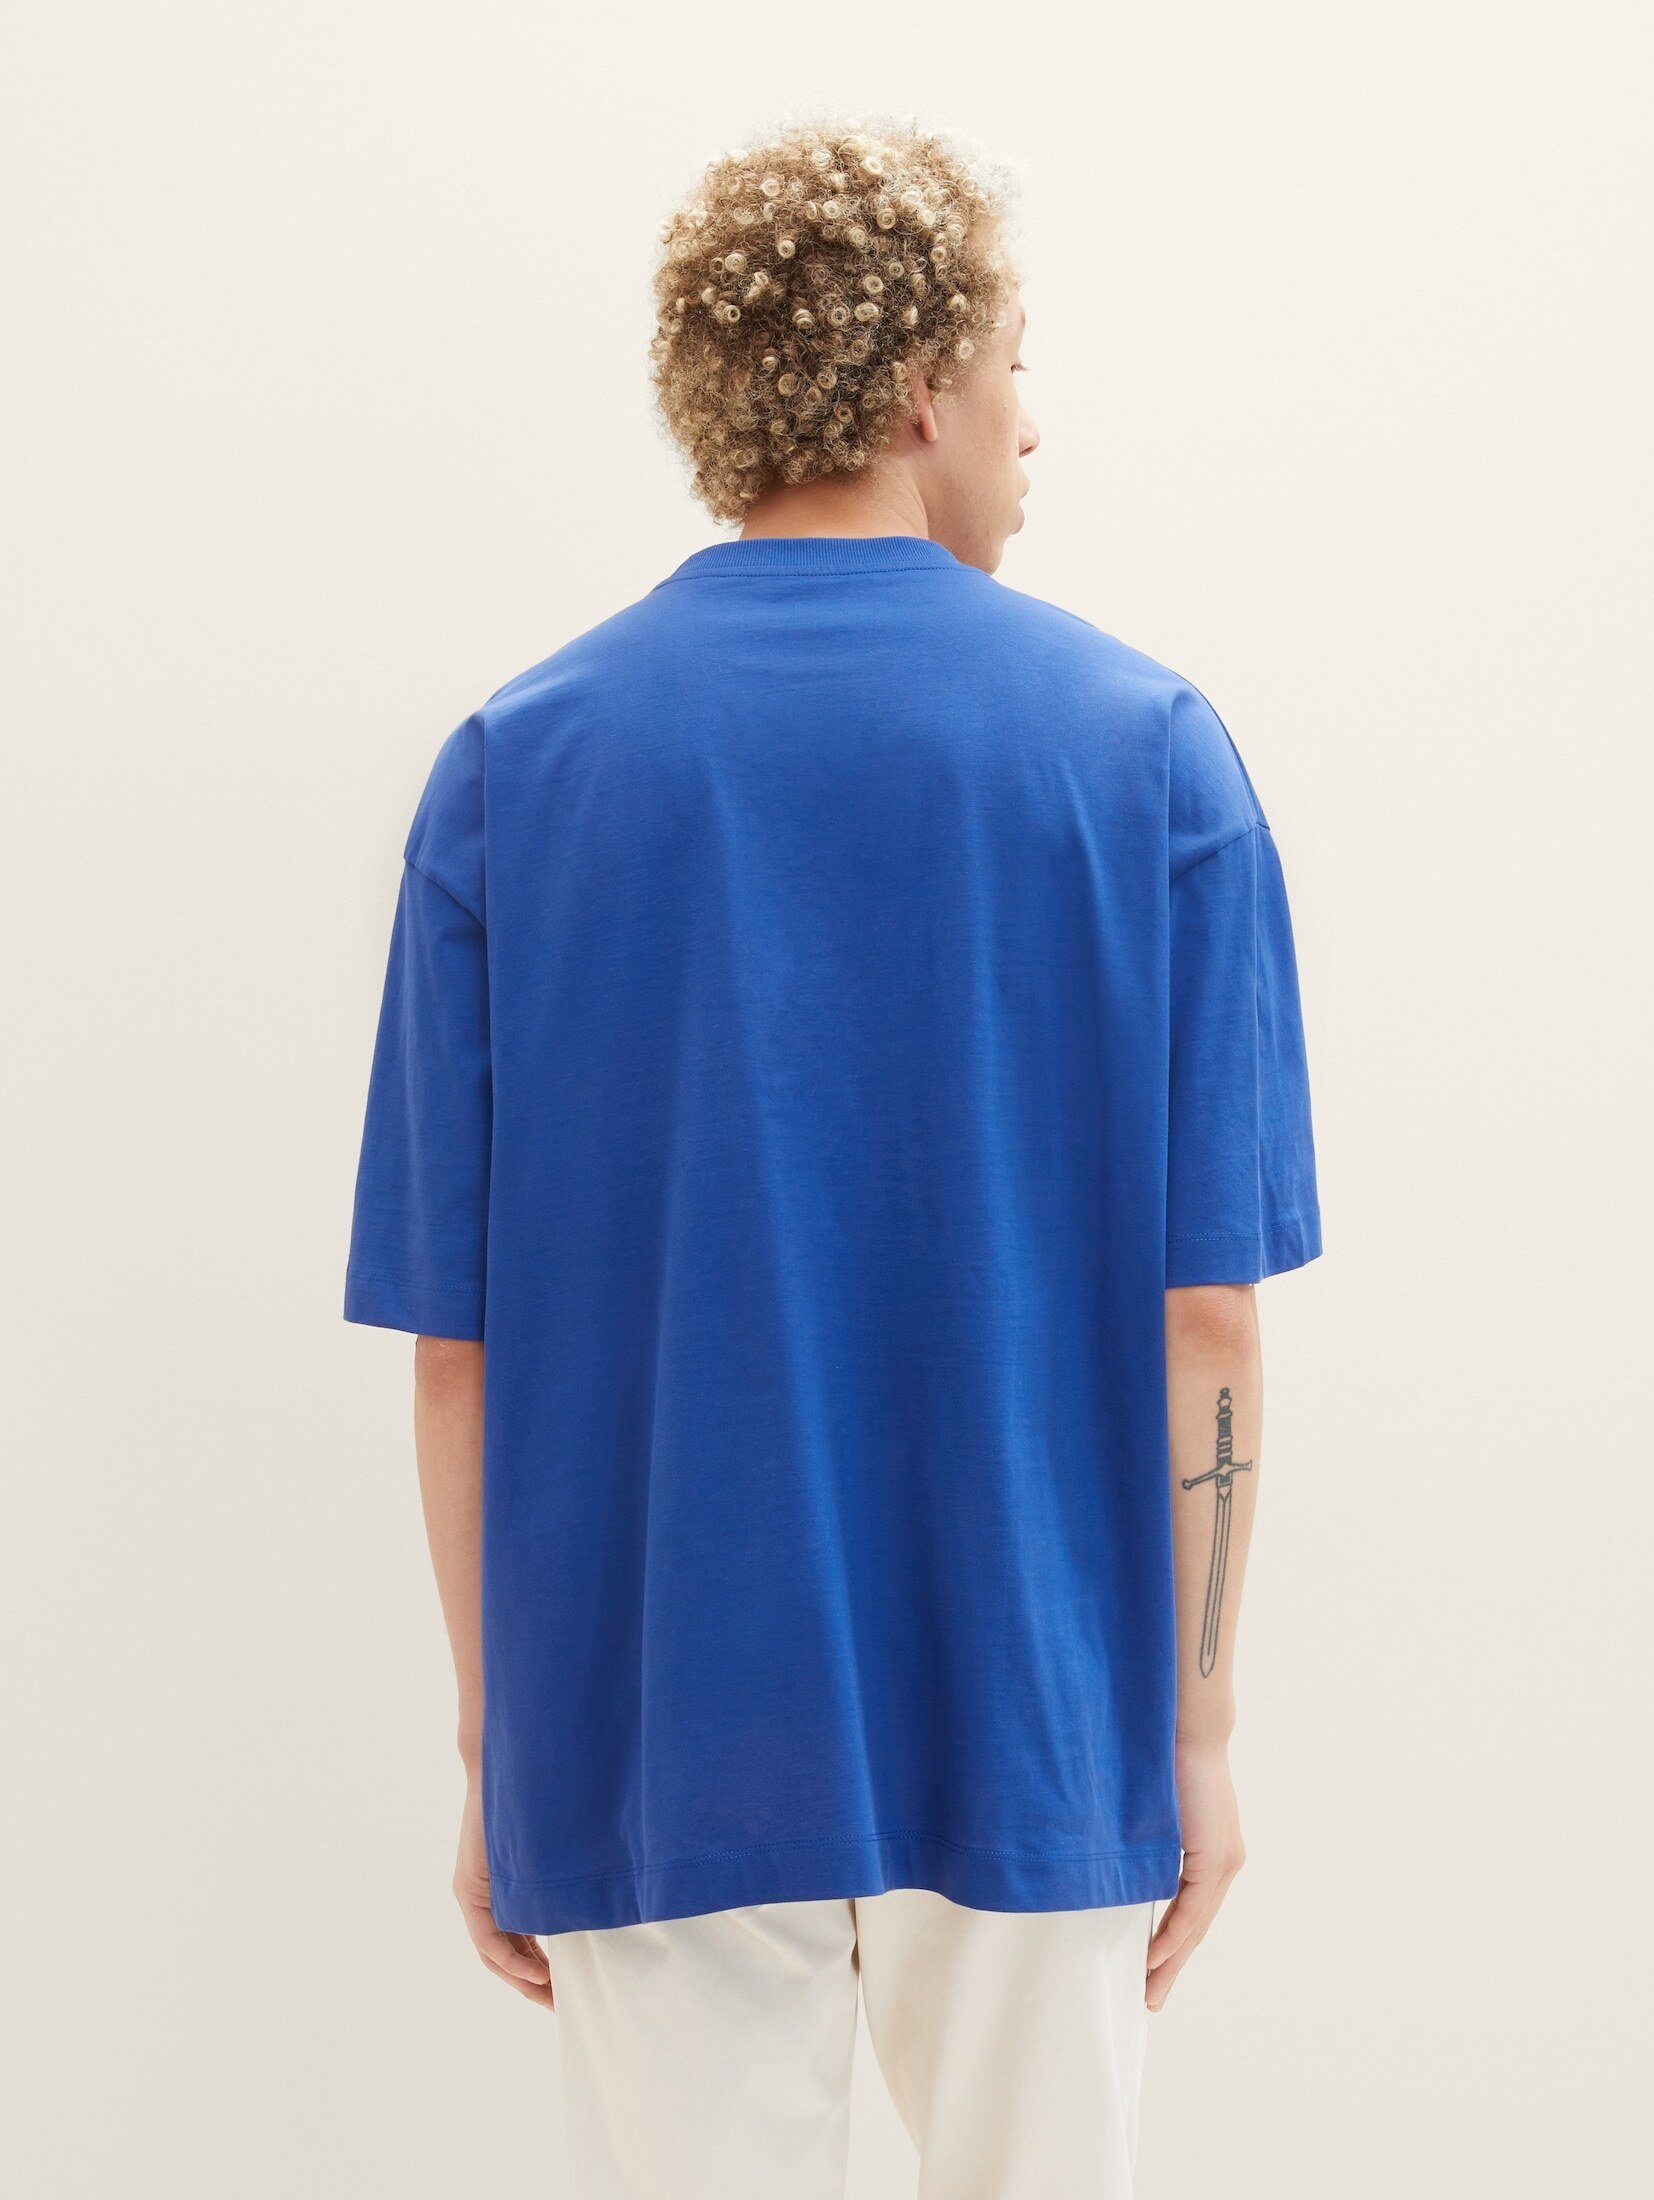 TOM Print mit shiny blue T-Shirt TAILOR royal Oversized Denim T-Shirt